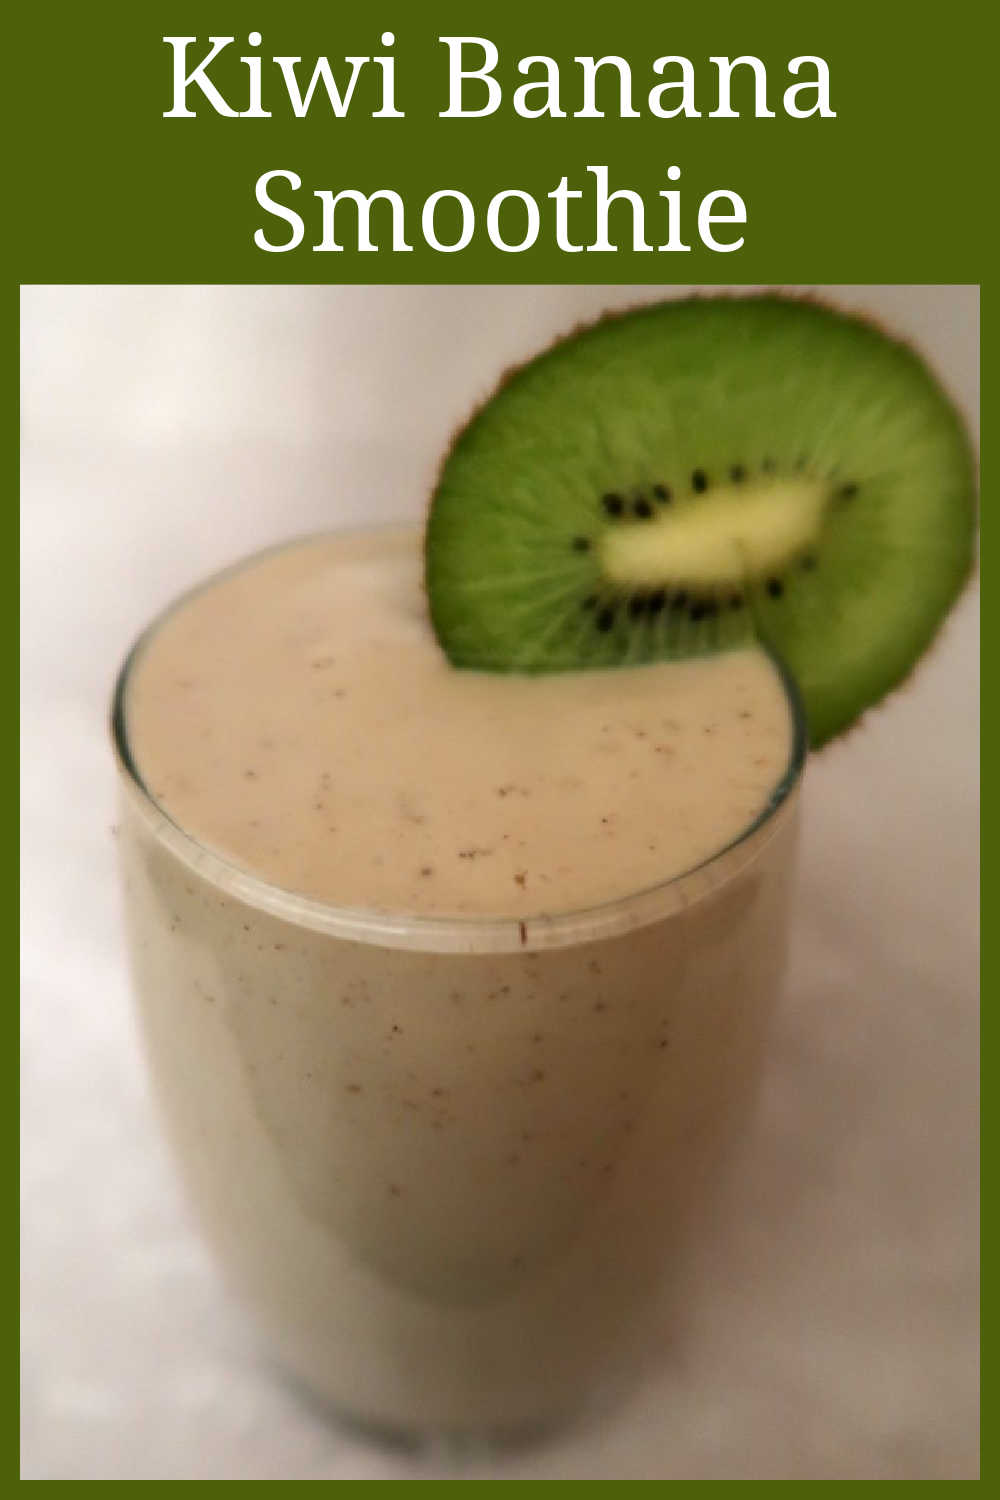 Kiwi Banana Smoothie Recipe - Easy Breakfast Smoothies Ideas with kiwi fruit, banana and oats - with the video tutorial.